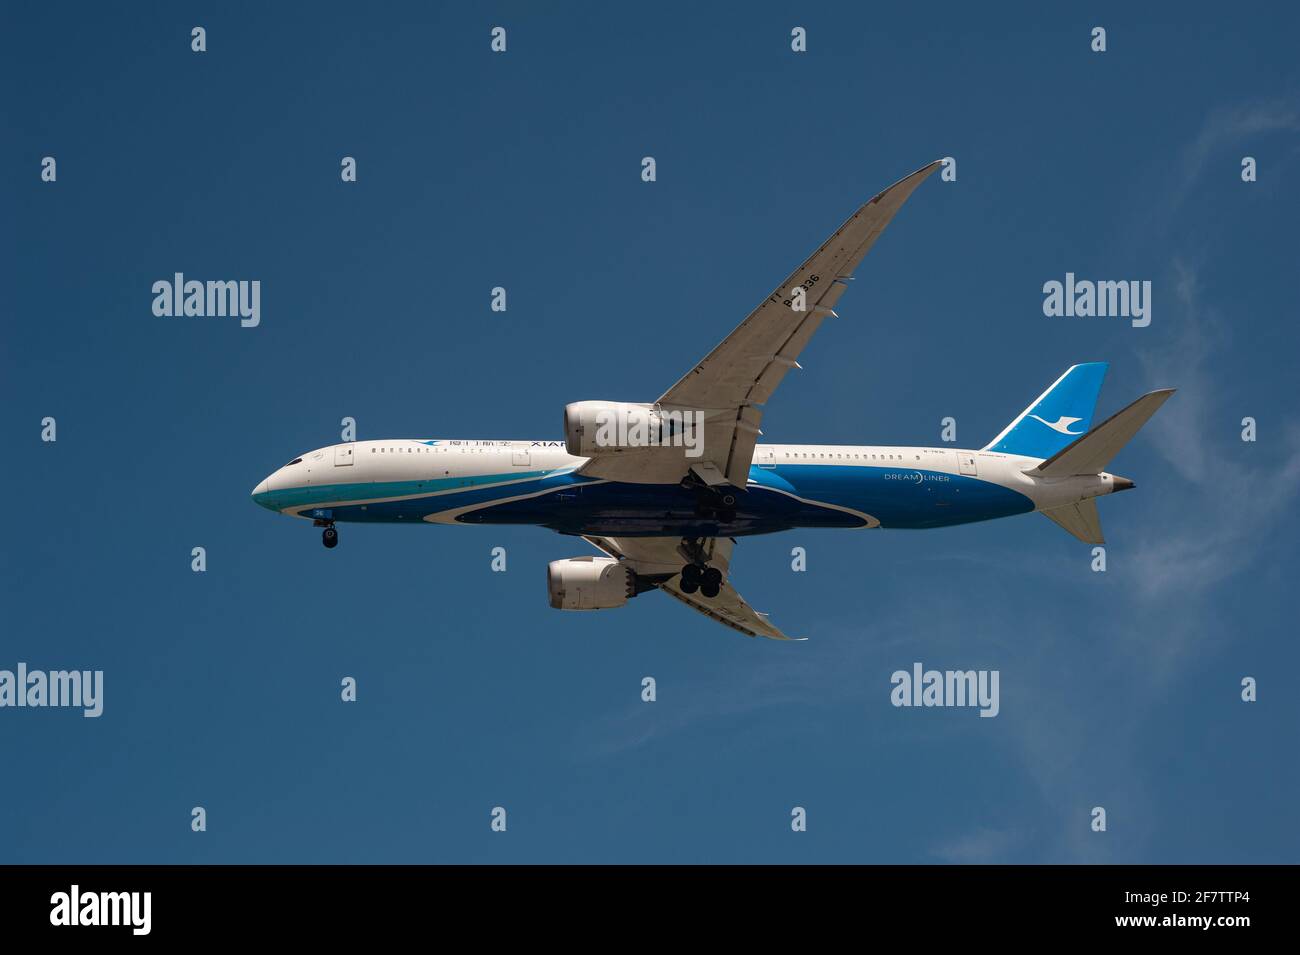 07.04.2021, Singapore, Republic of Singapore, Asia - A Xiamen Air Boeing 787-9 Dreamliner passenger plane approaches Changi Airport for landing. Stock Photo